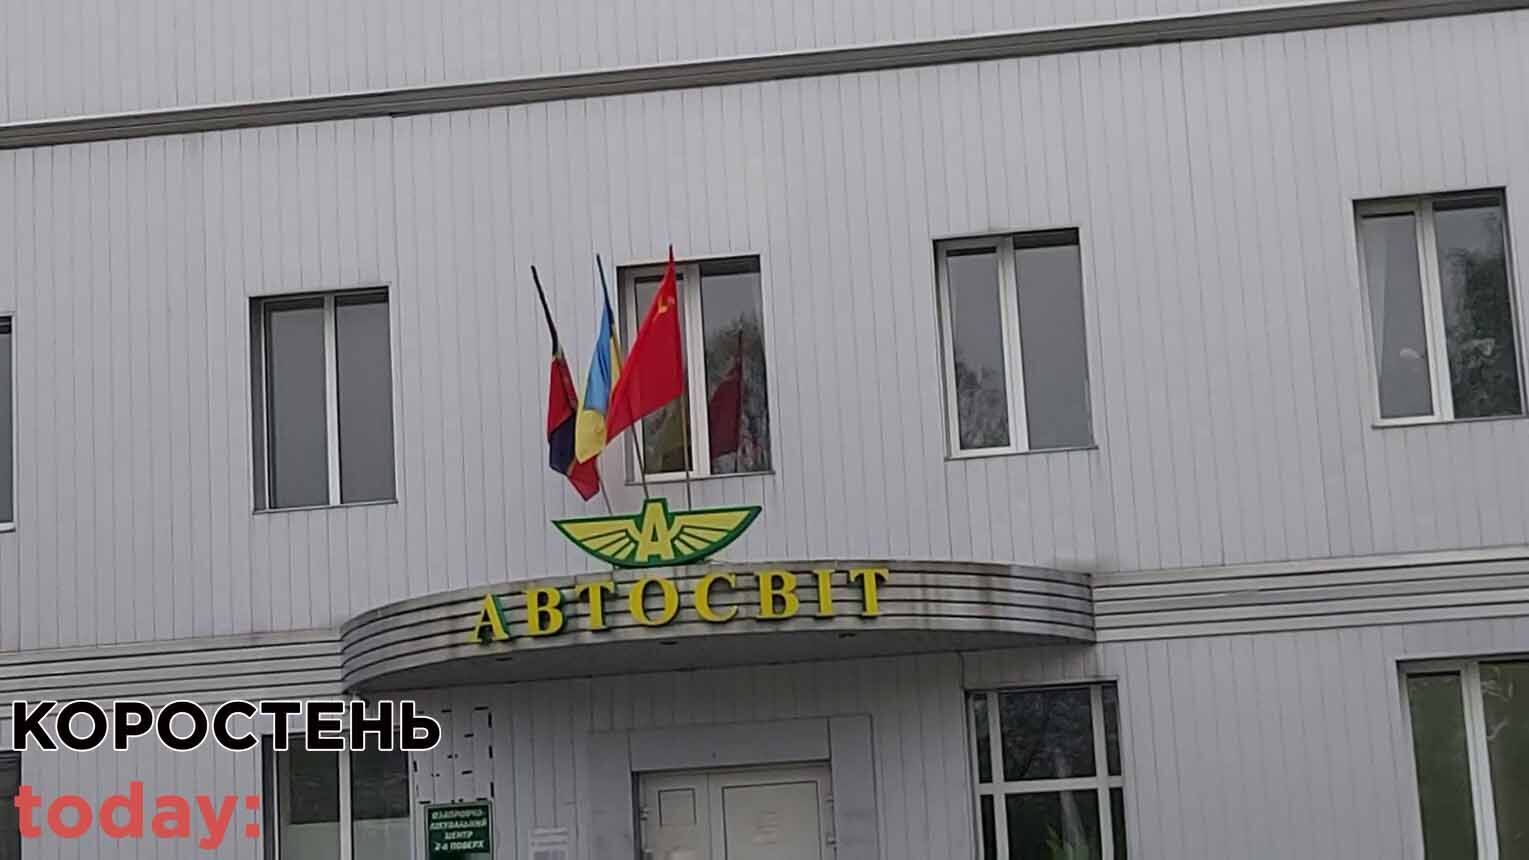 ООО "Автомир" разместило у входа флаг Советского Союза.